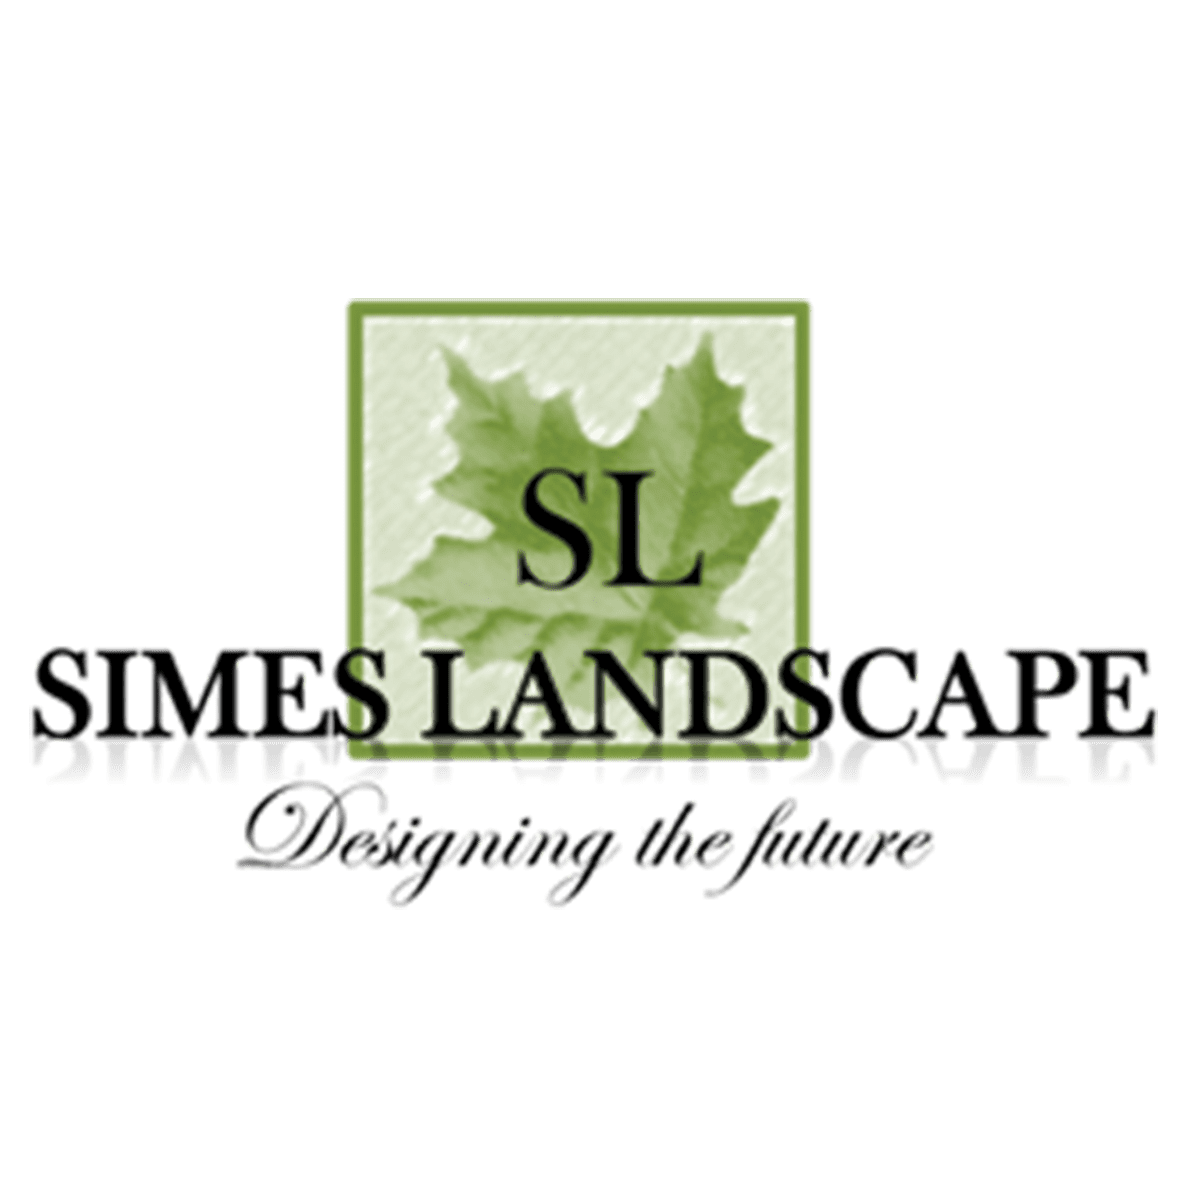 SL Simes Landscape